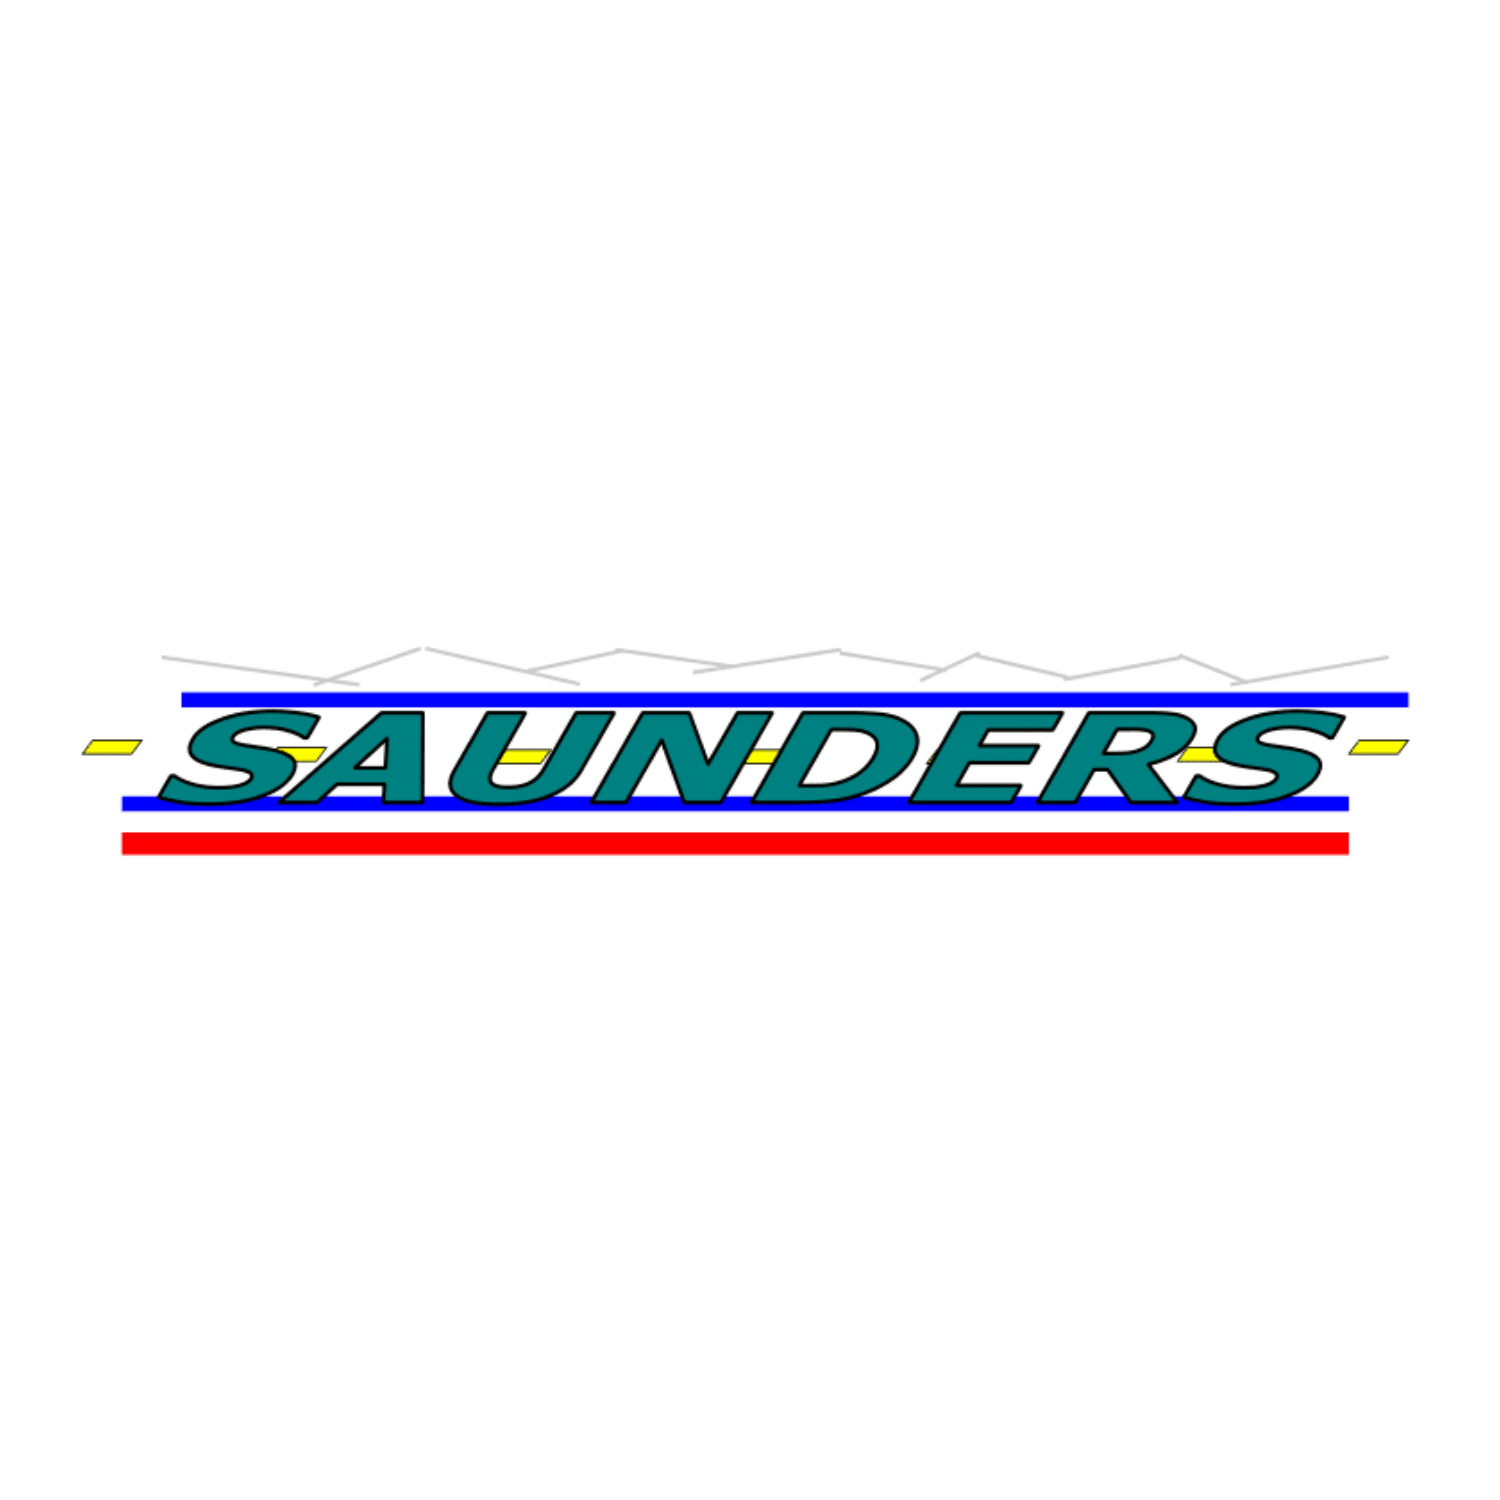 Duane Saunders Co. Ltd